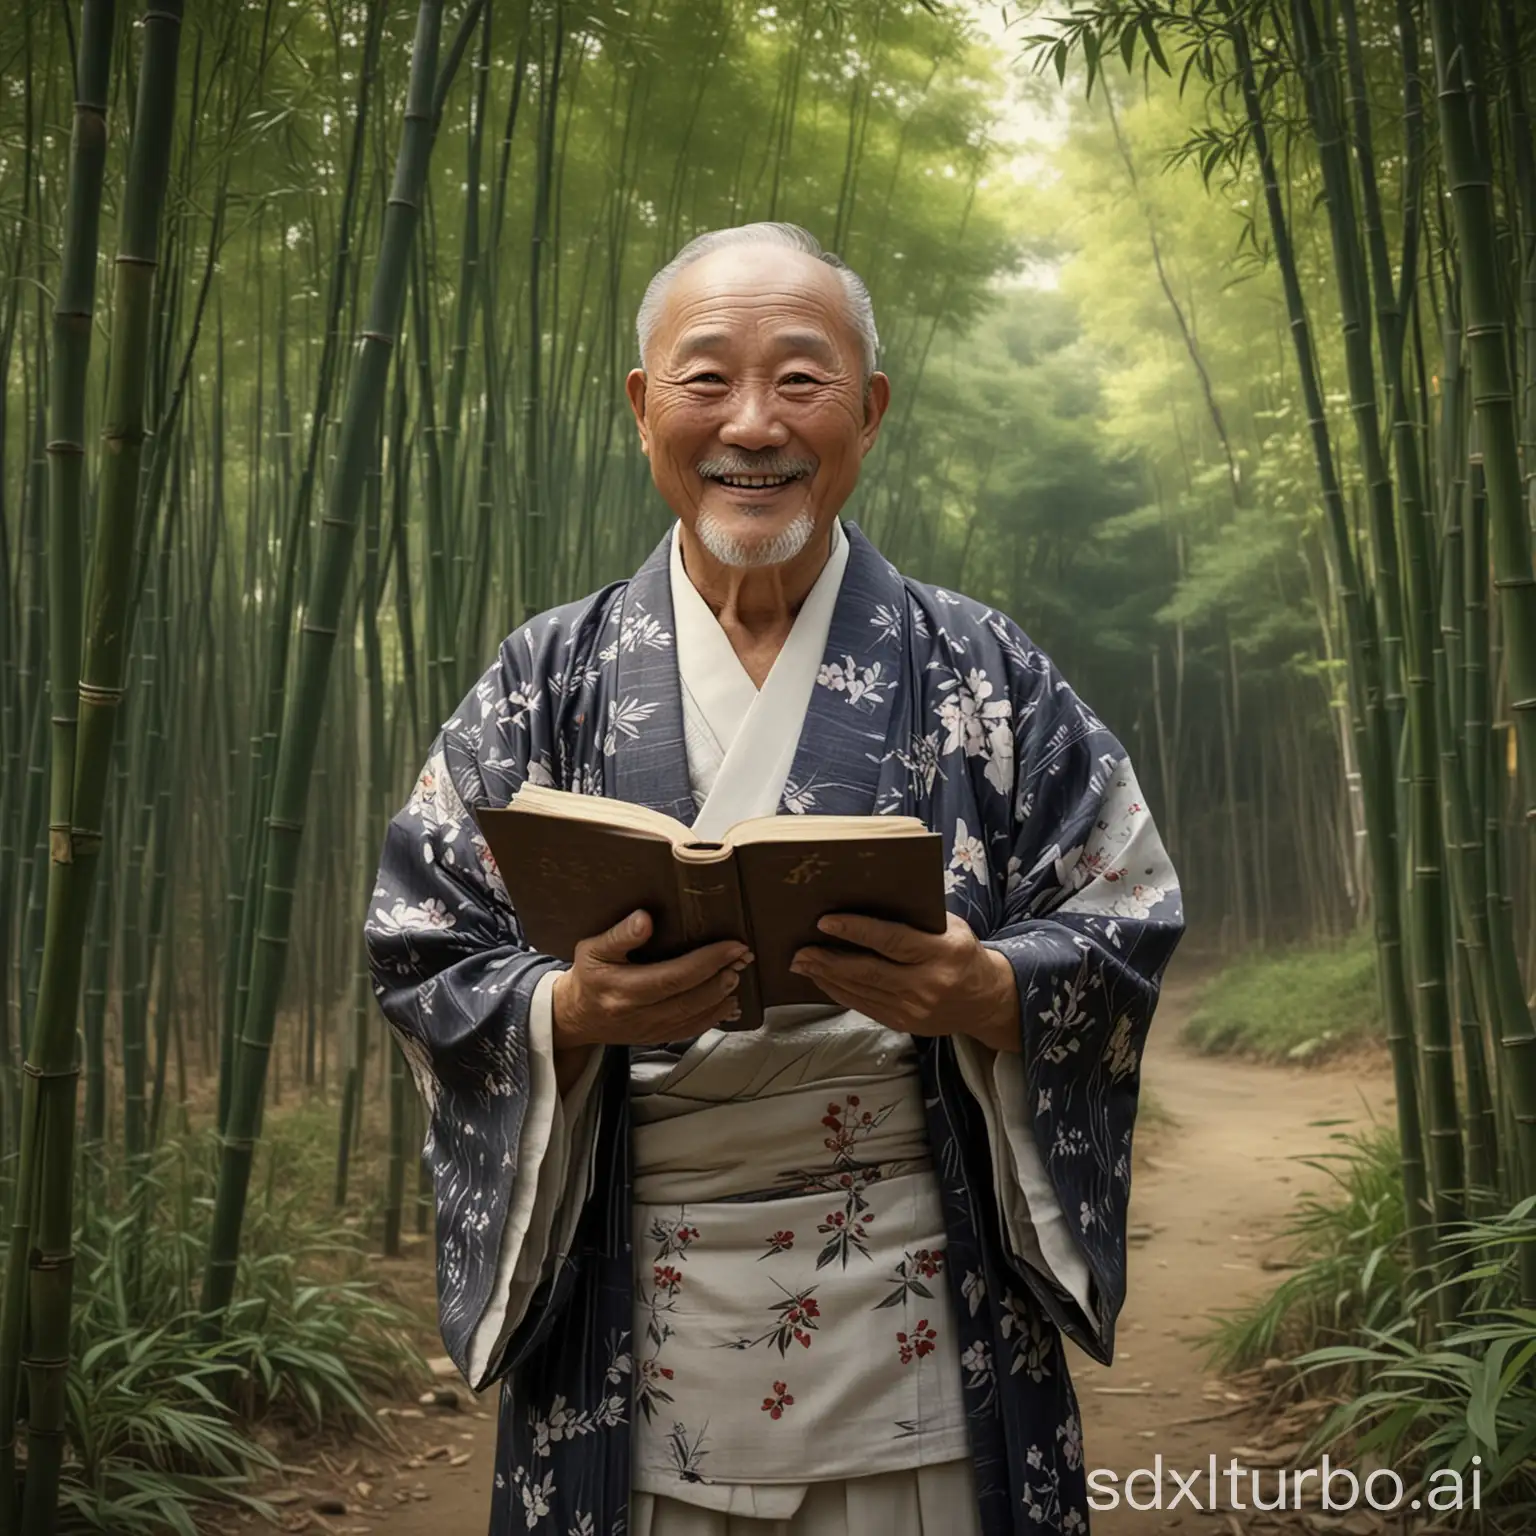 Smiling-Elderly-Korean-Man-Reading-Book-in-Bamboo-Grove